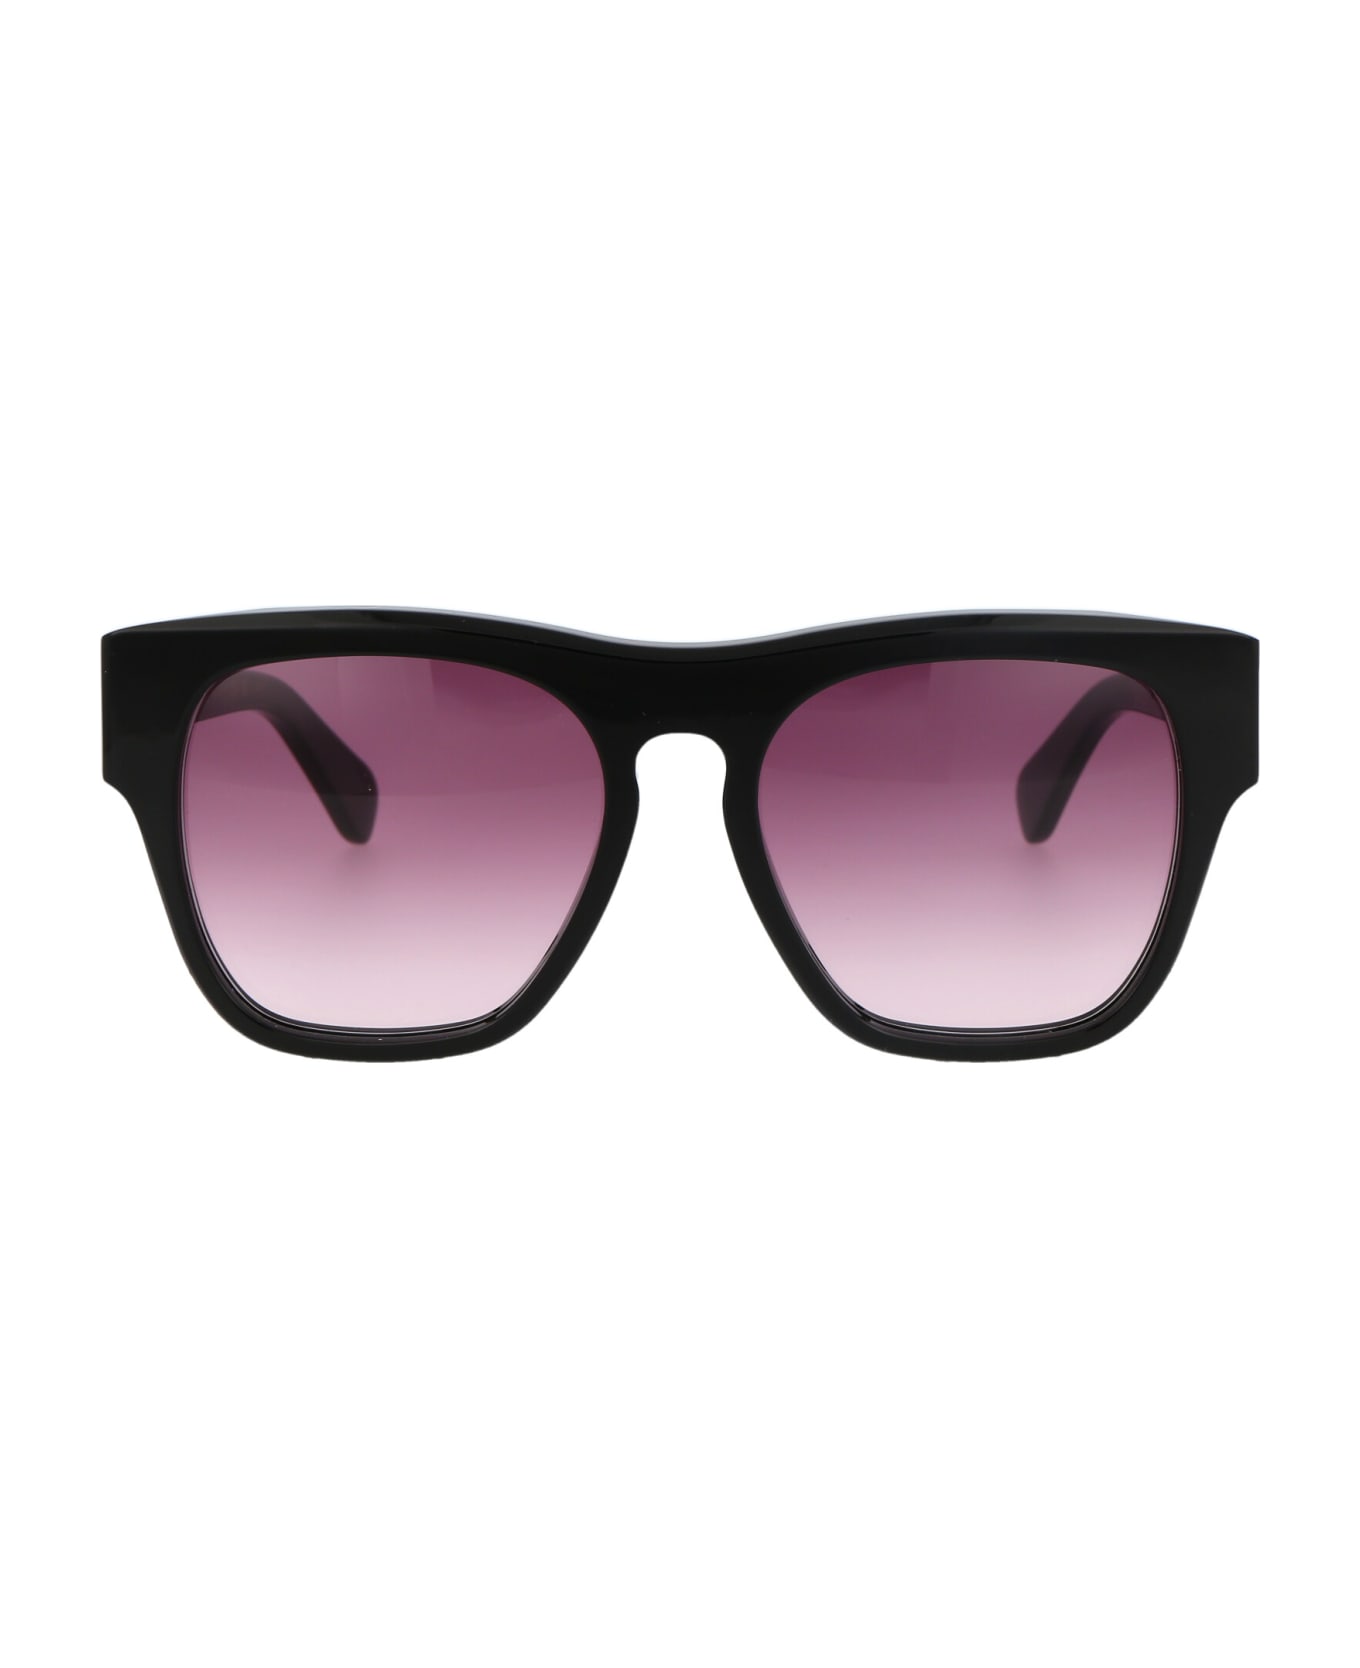 Chloé Eyewear Ch0149s Sunglasses - 001 BLACK BLACK RED サングラス